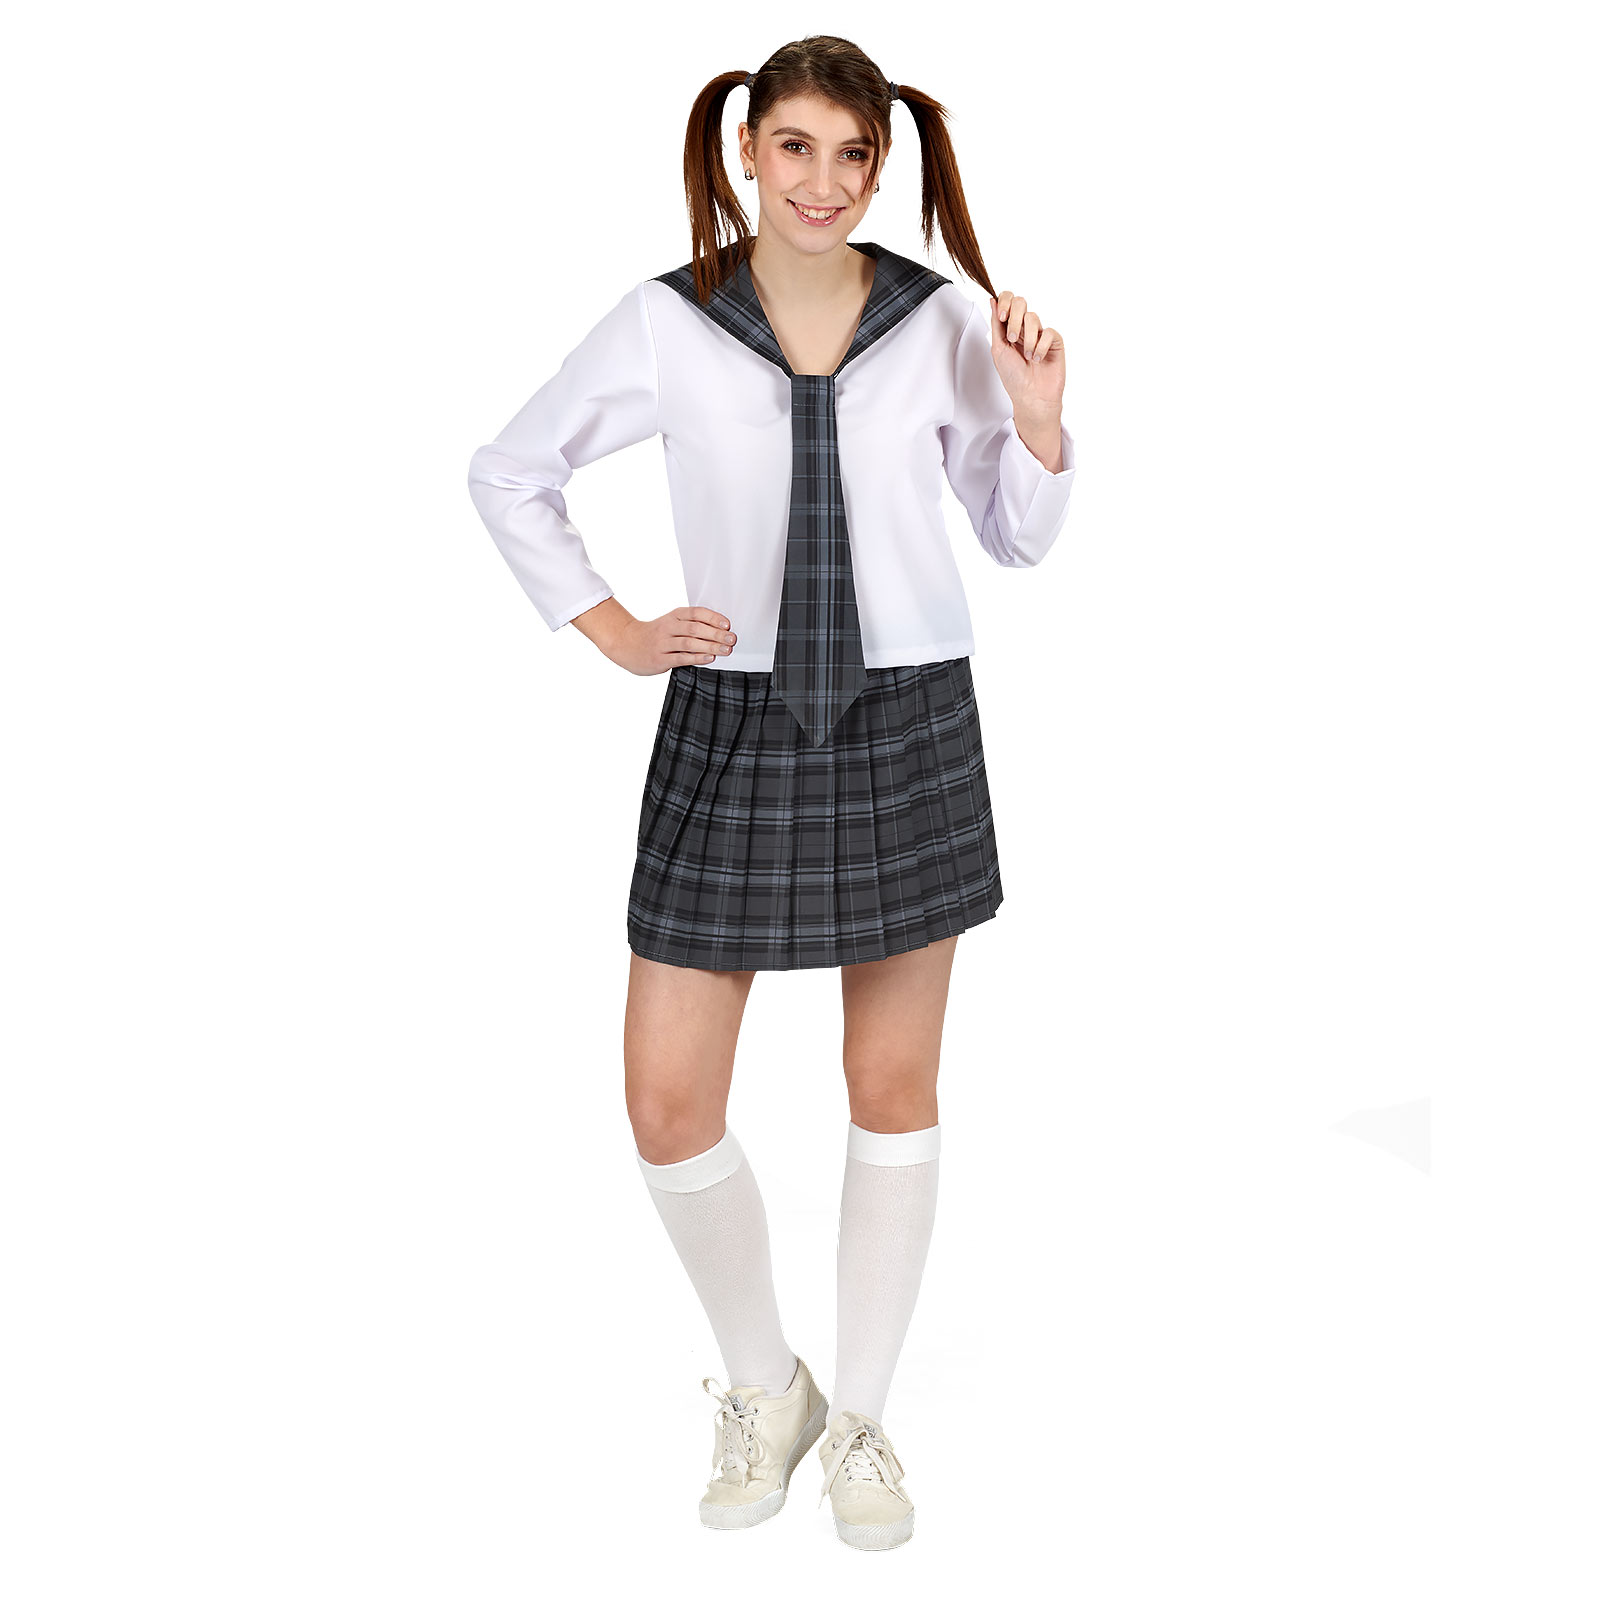 Cosplay School Girl Kostüm Damen